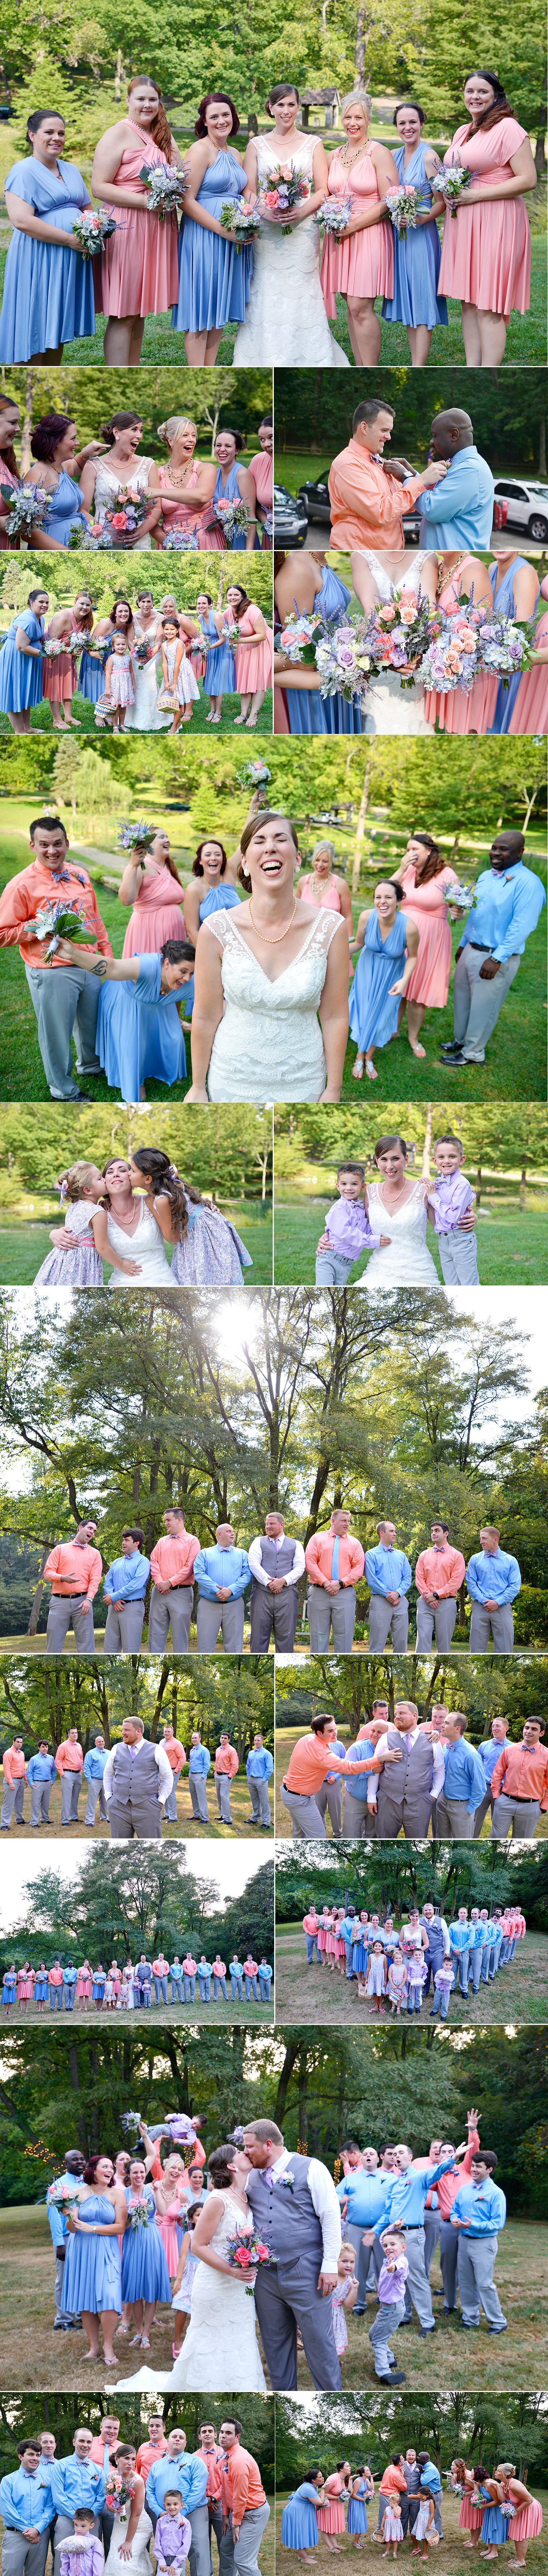 3 Rising park Lancaster Ohio bridal party